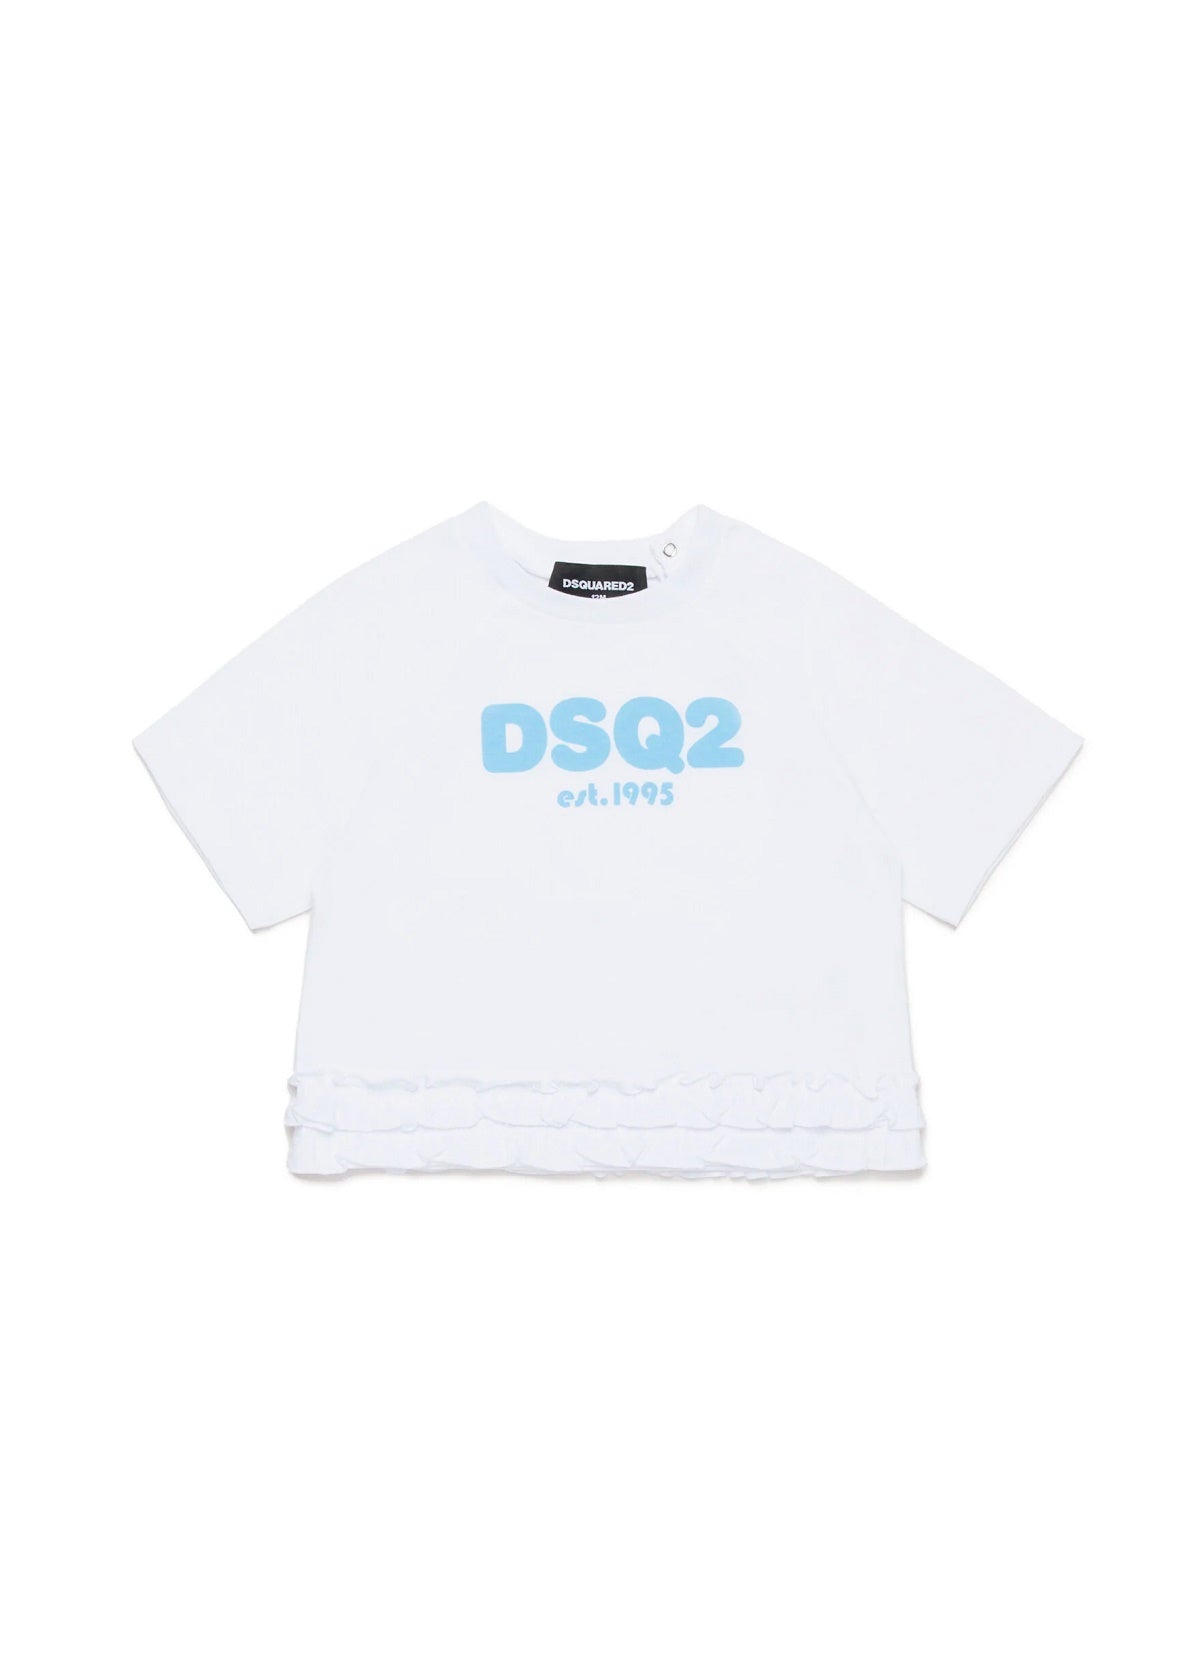 Dsquared2 Kids T-Shirt Bianca con Logo DSQ2 est.1995 e Ruches per Neonate